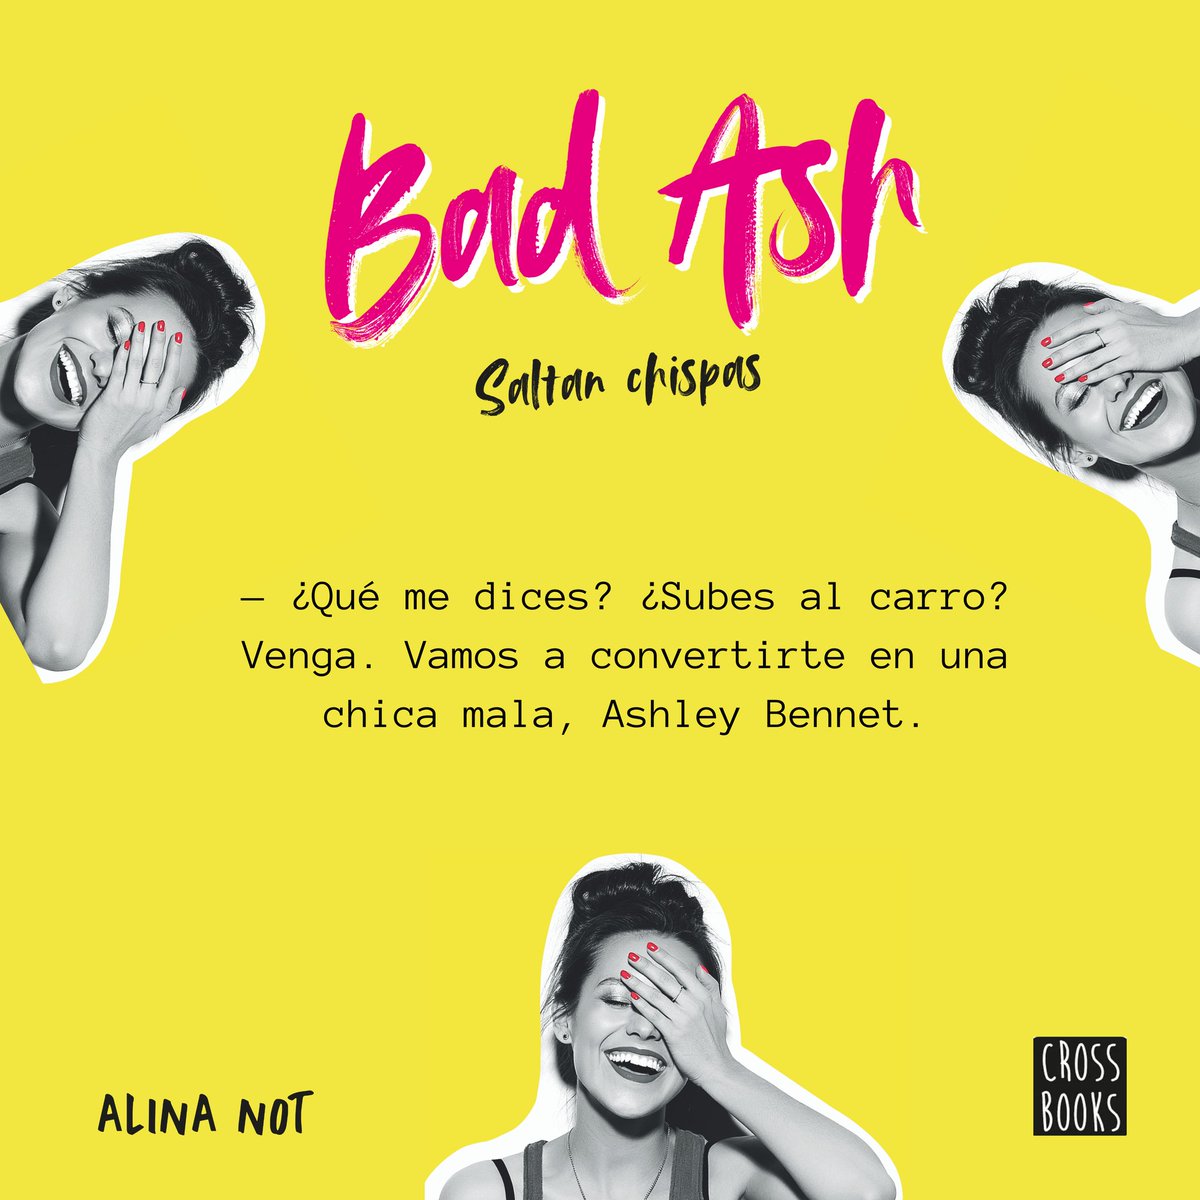 BAD ASH 1. SALTAN CHISPAS, ALINA NOT, Crossbooks